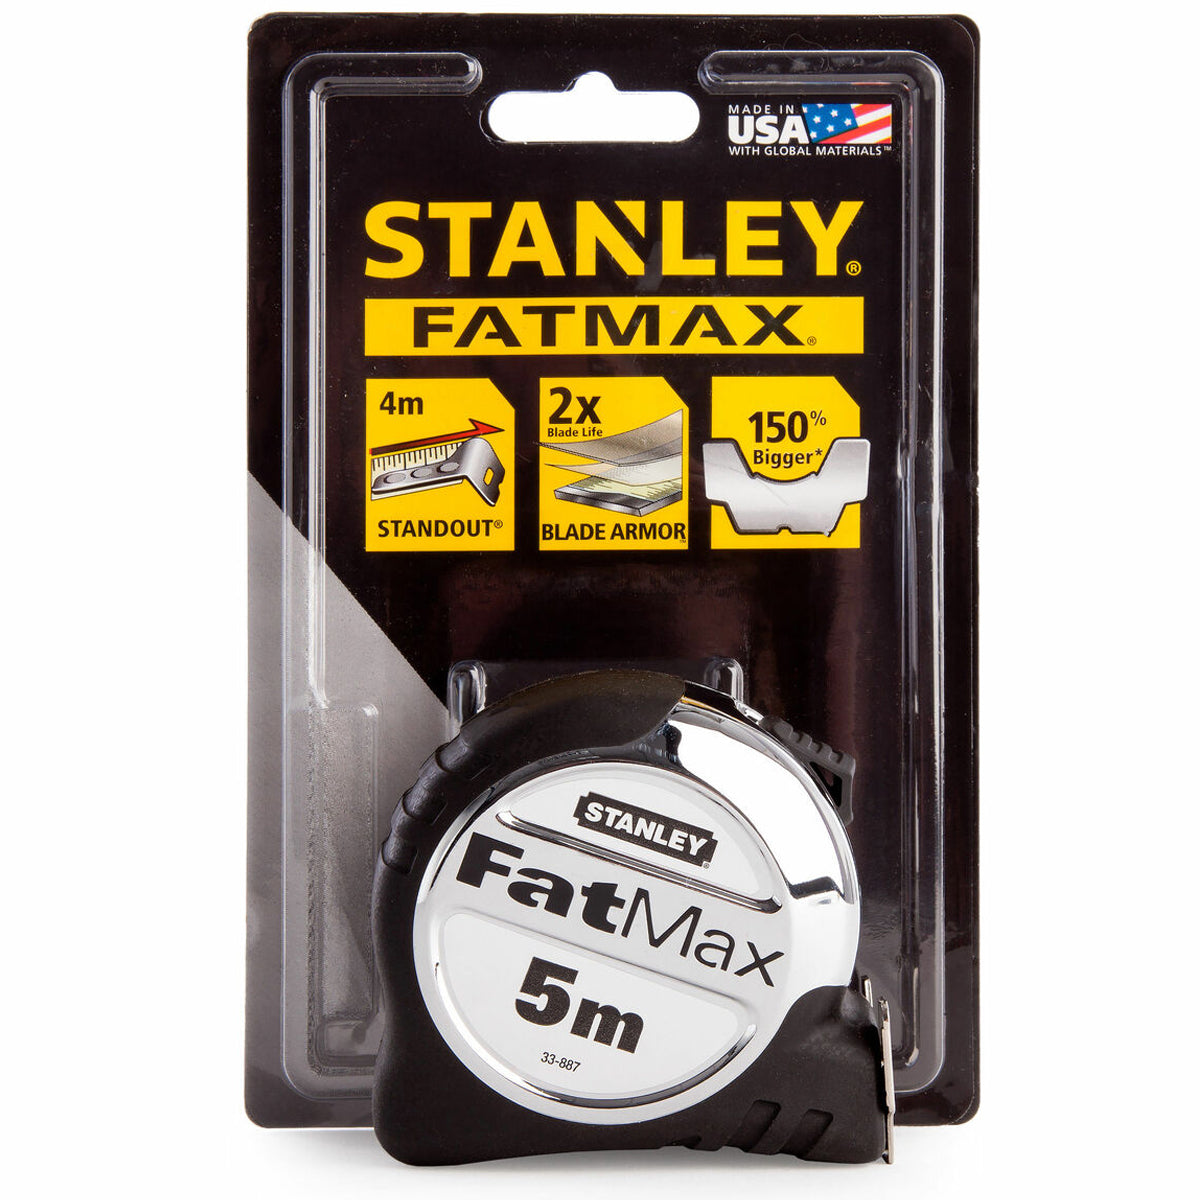 Stanley 0-33-887 FatMax Xtreme Tape Rule Measure 5m Metric STA033887m